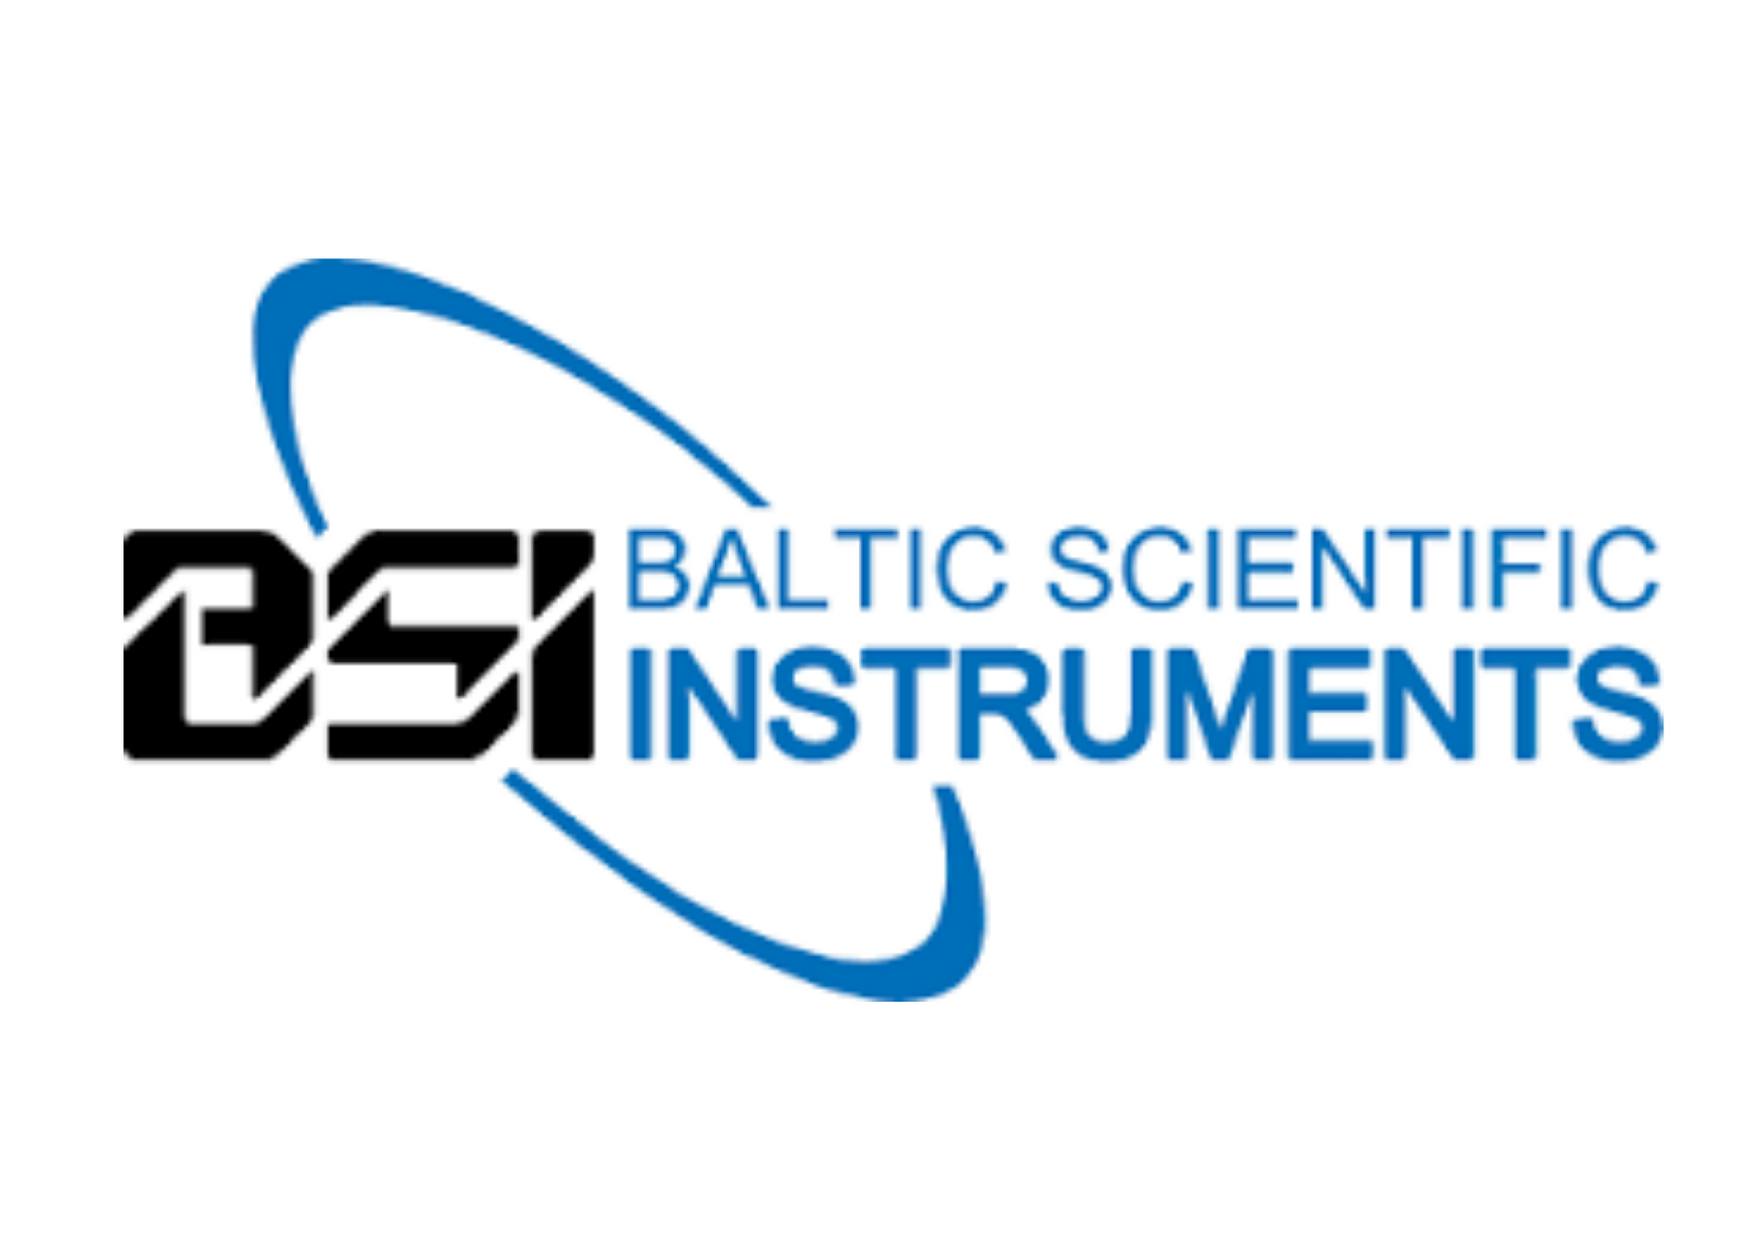 Baltic Scientific instruments